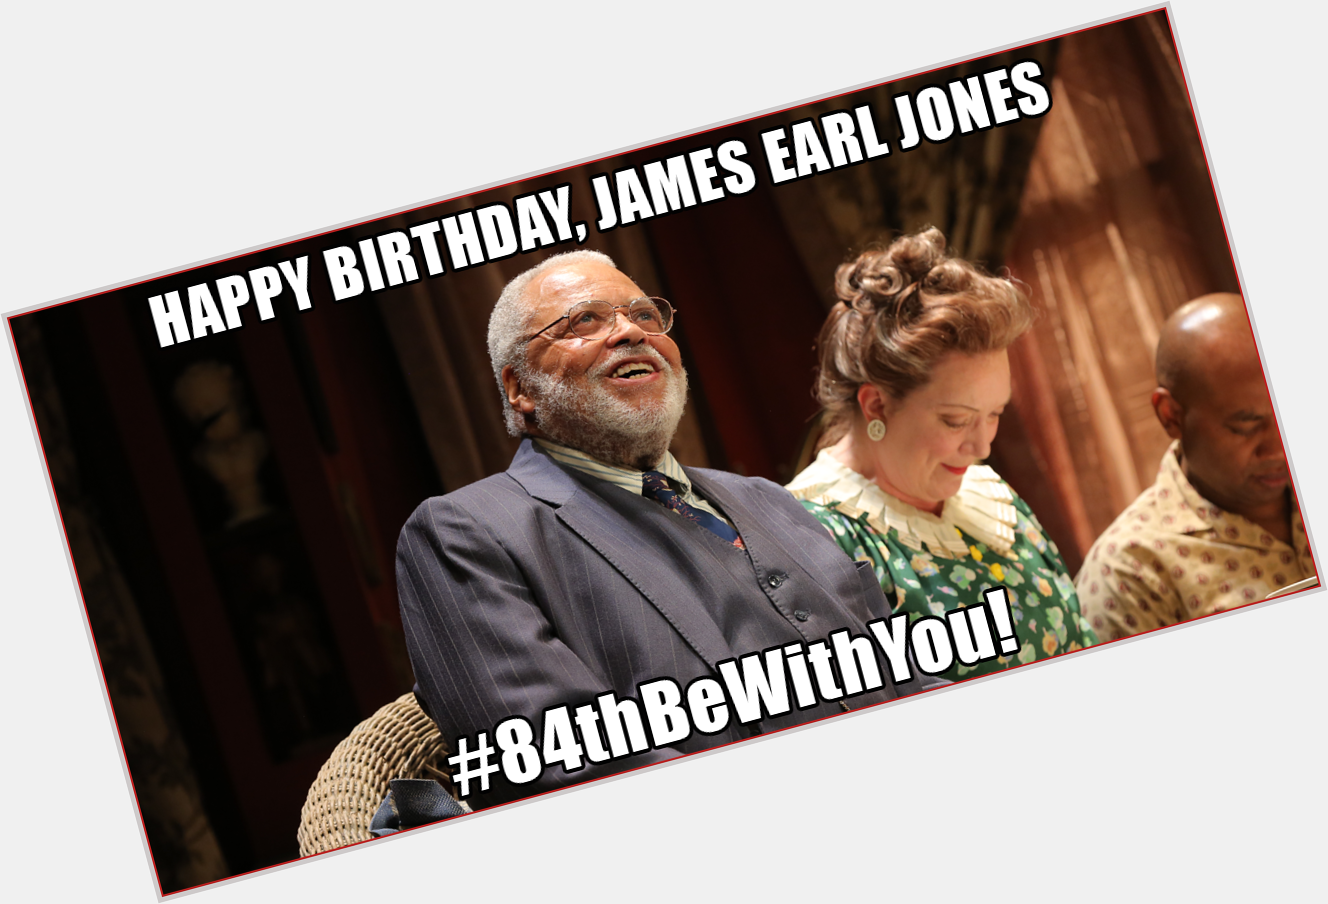 Happy Birthday, James Earl Jones  Starring in the uproarious 